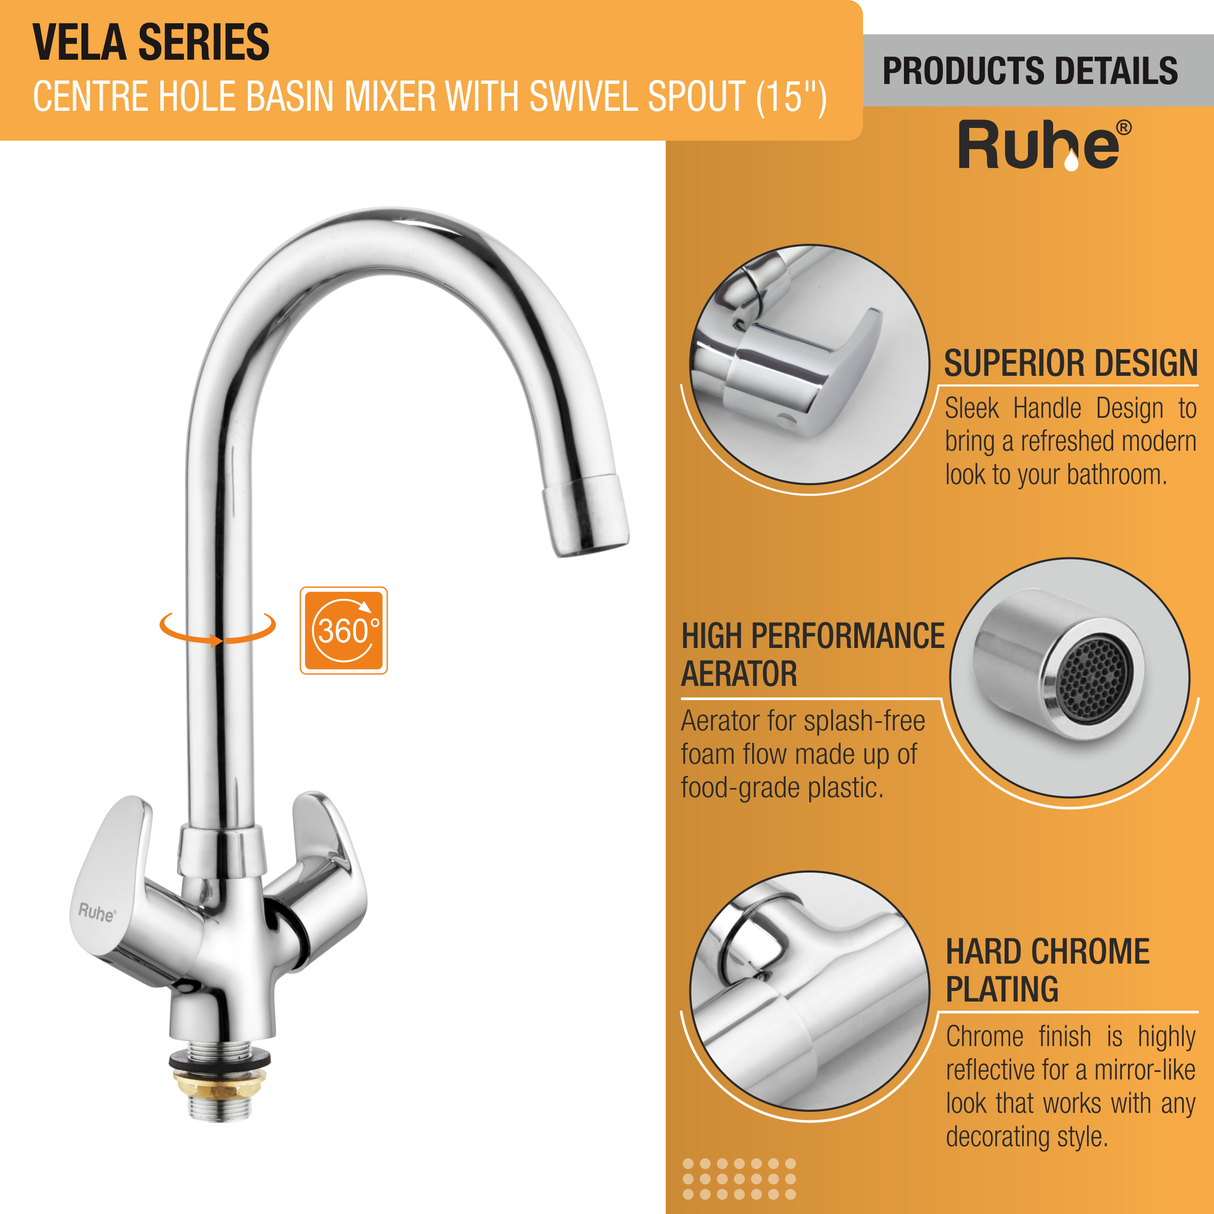 Vela Centre Hole Basin Mixer with Medium (15 inches) Round Swivel Spout Faucet details